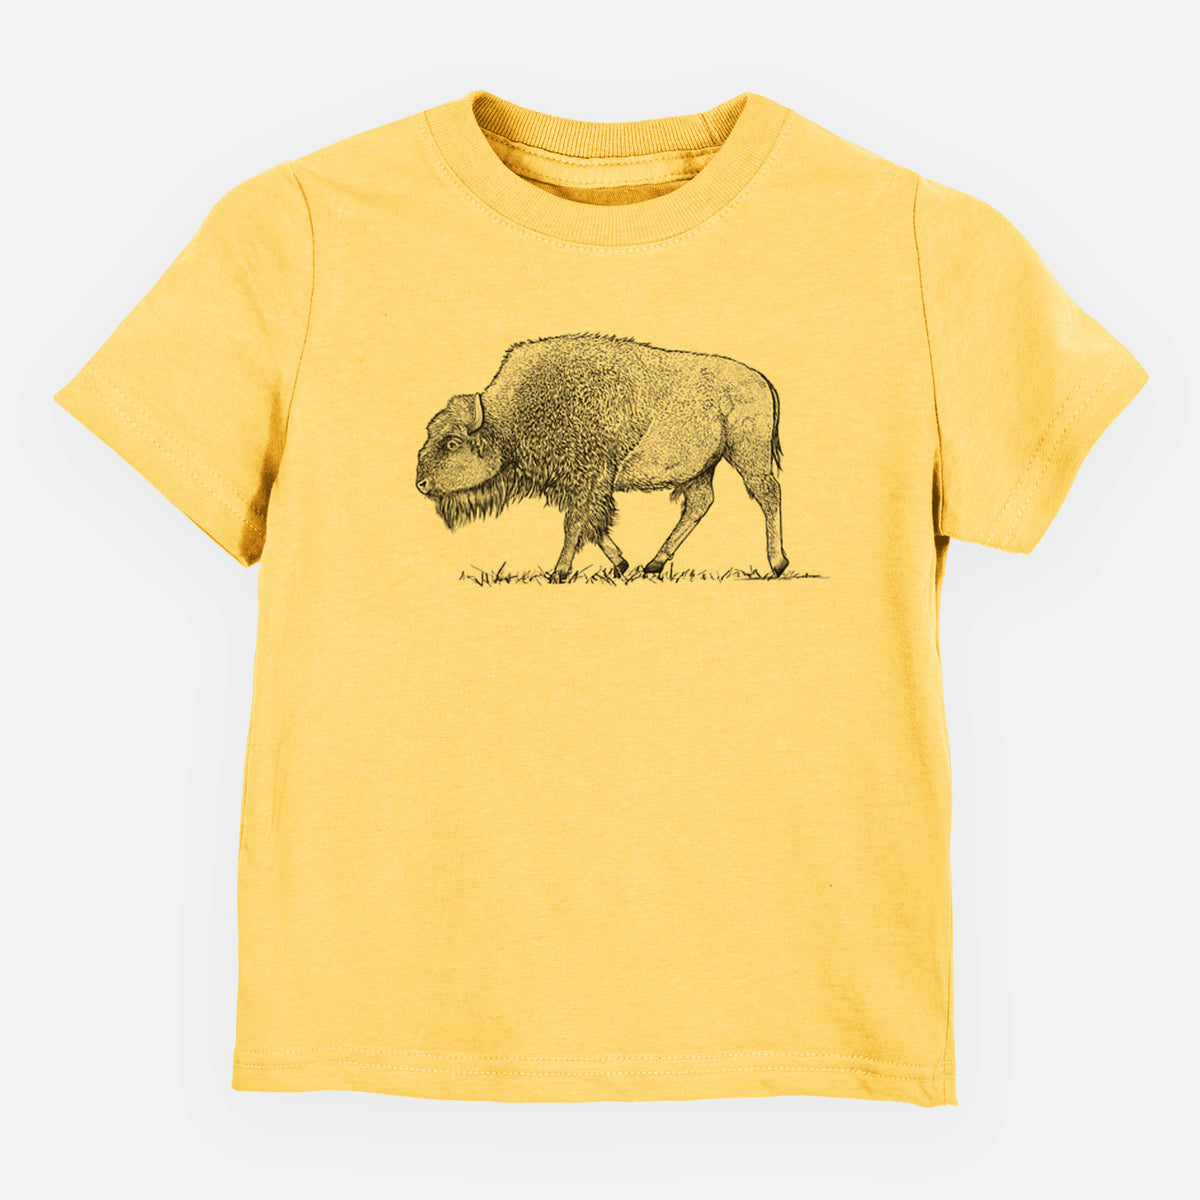 American Bison / Buffalo - Bison bison - Kids Shirt